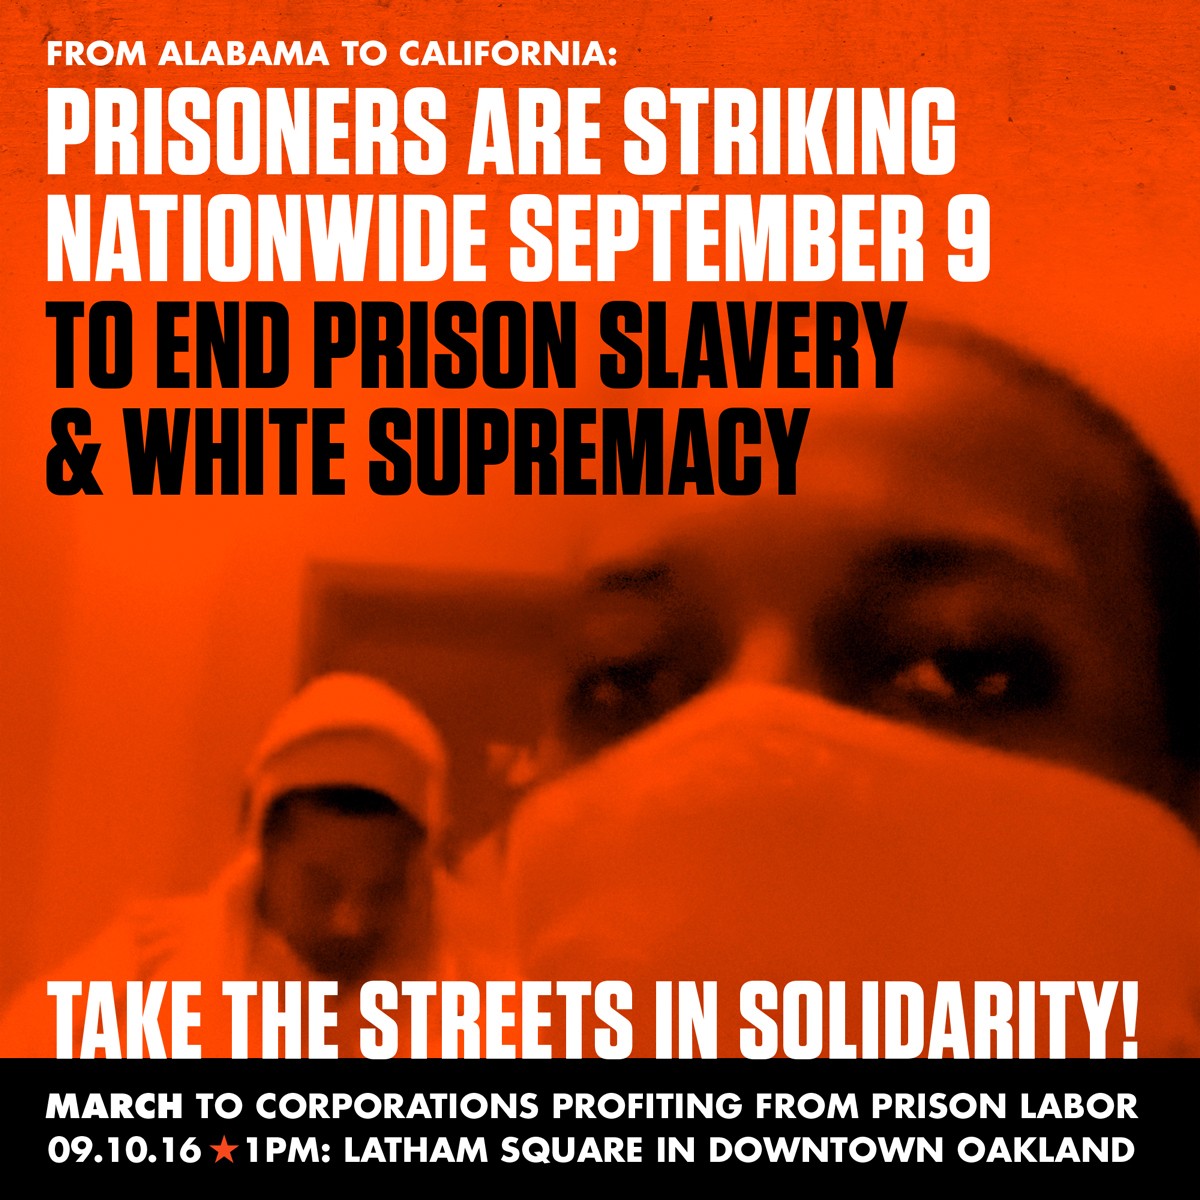 PrisonStrike_OaklandMarch_Alabama